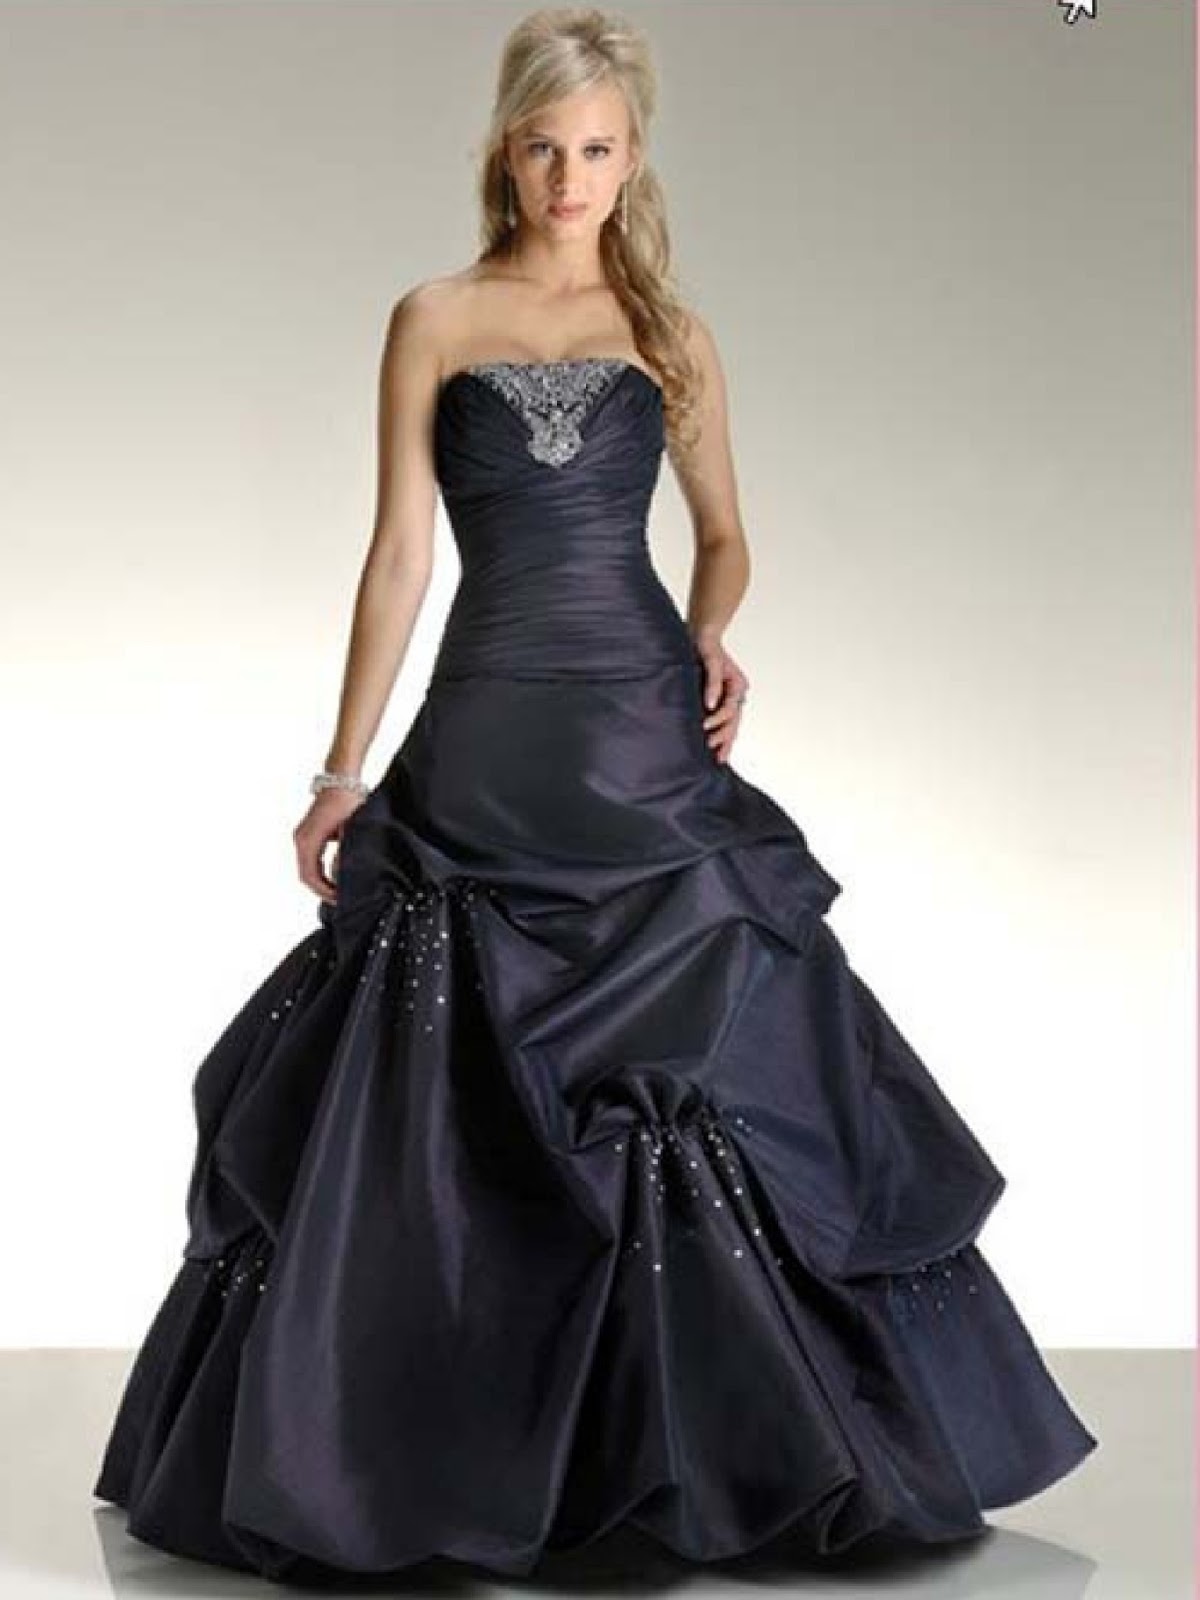 WhiteAzalea Prom Dresses: Long Prom Dress In This Prom Season